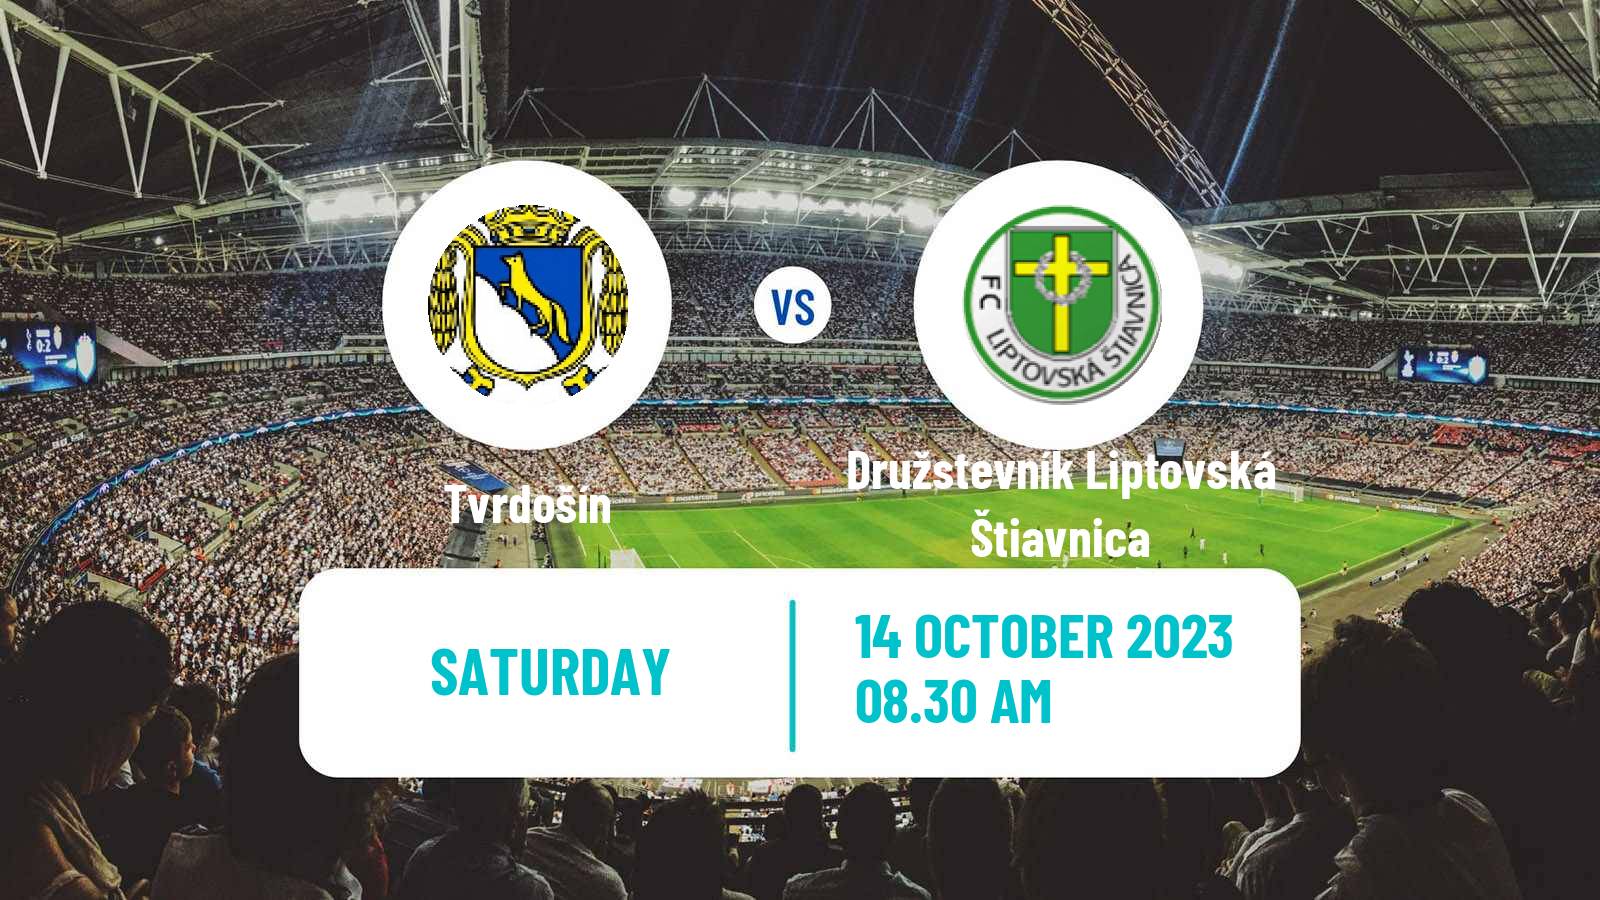 Soccer Slovak 4 Liga Central Tvrdošín - Družstevník Liptovská Štiavnica